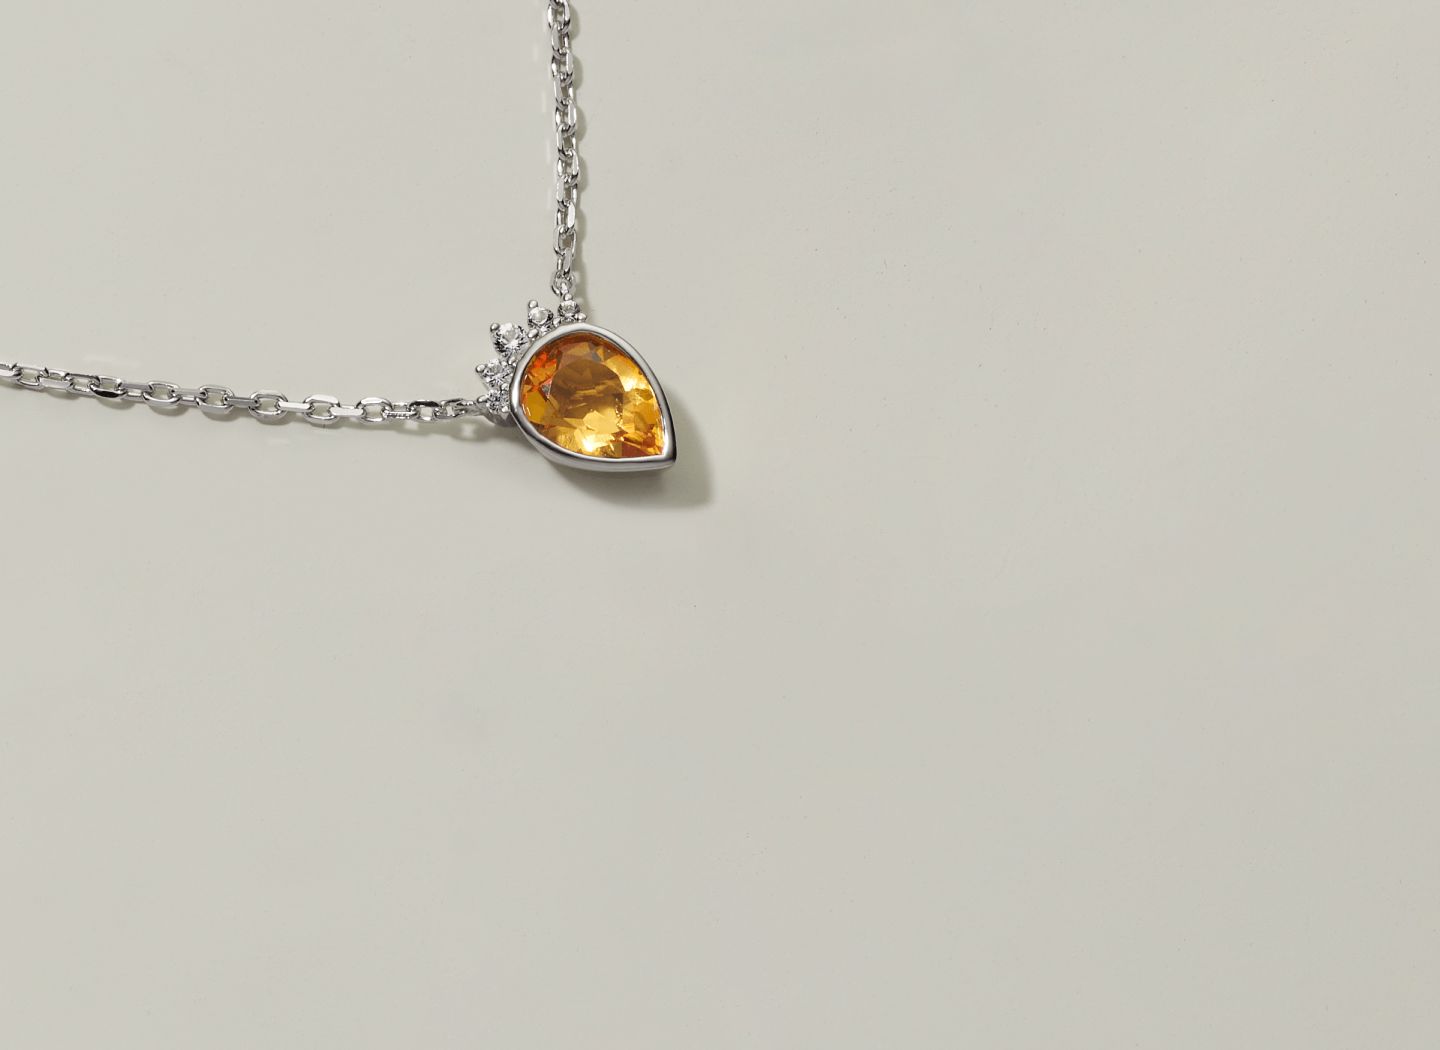 A single gemstone pendant